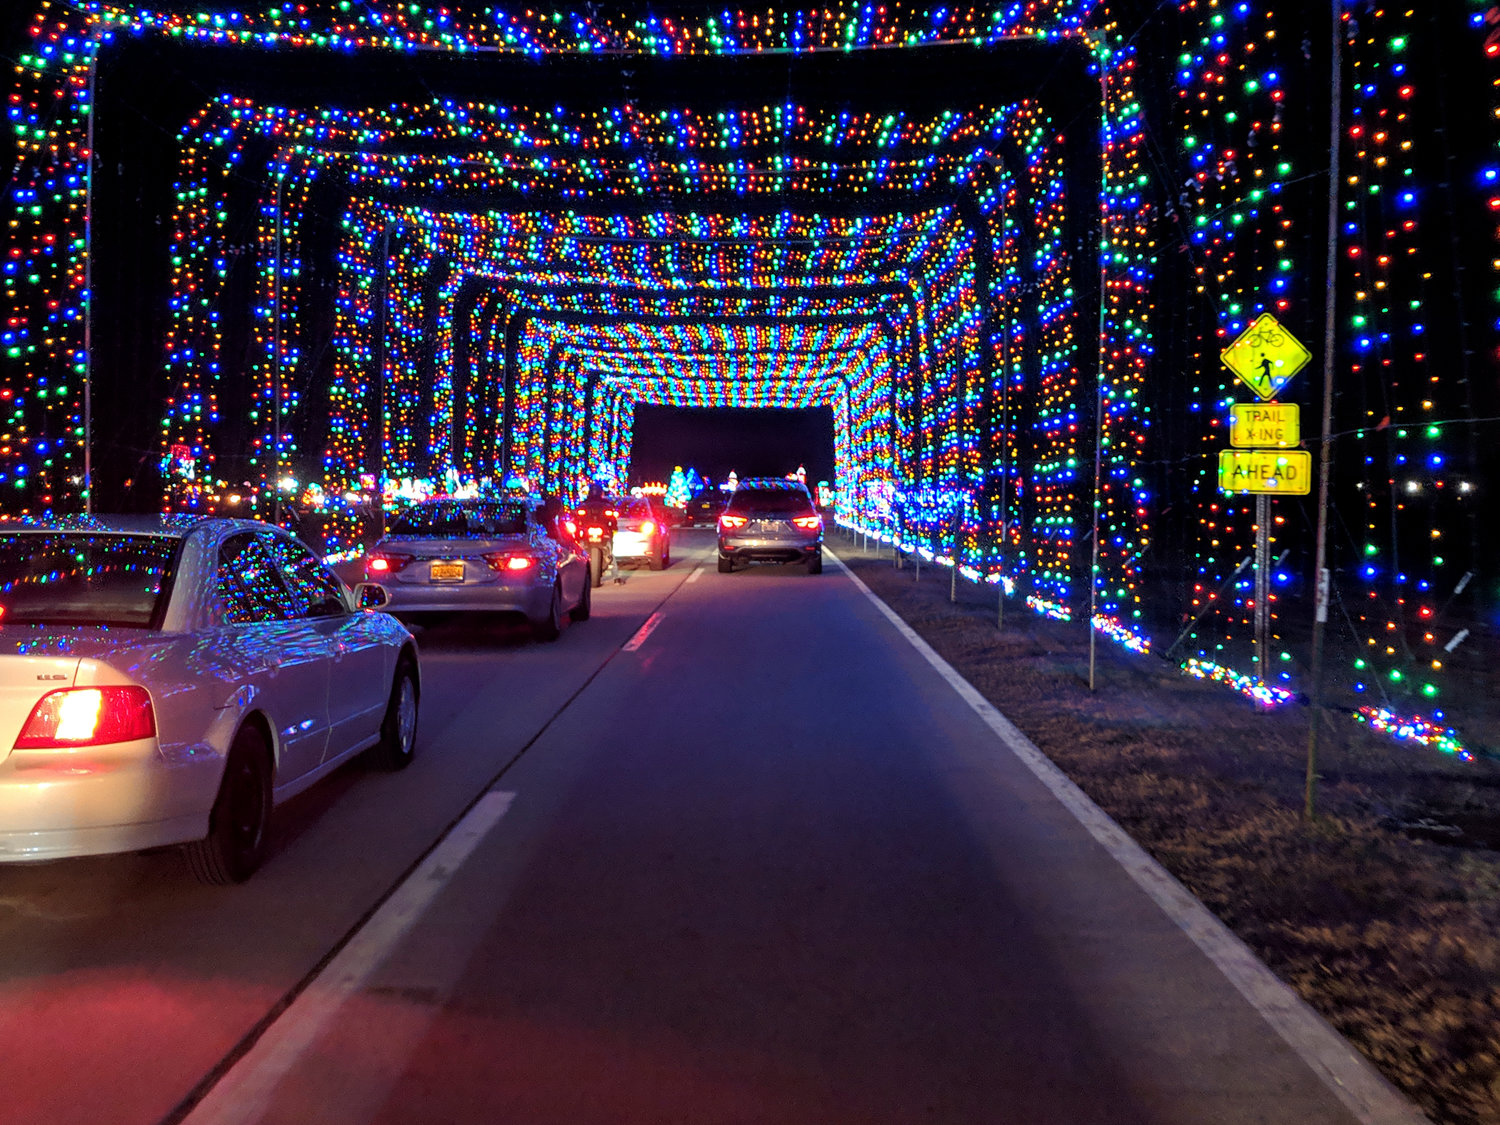 Lights tell holiday stories at Jones beach Herald Community